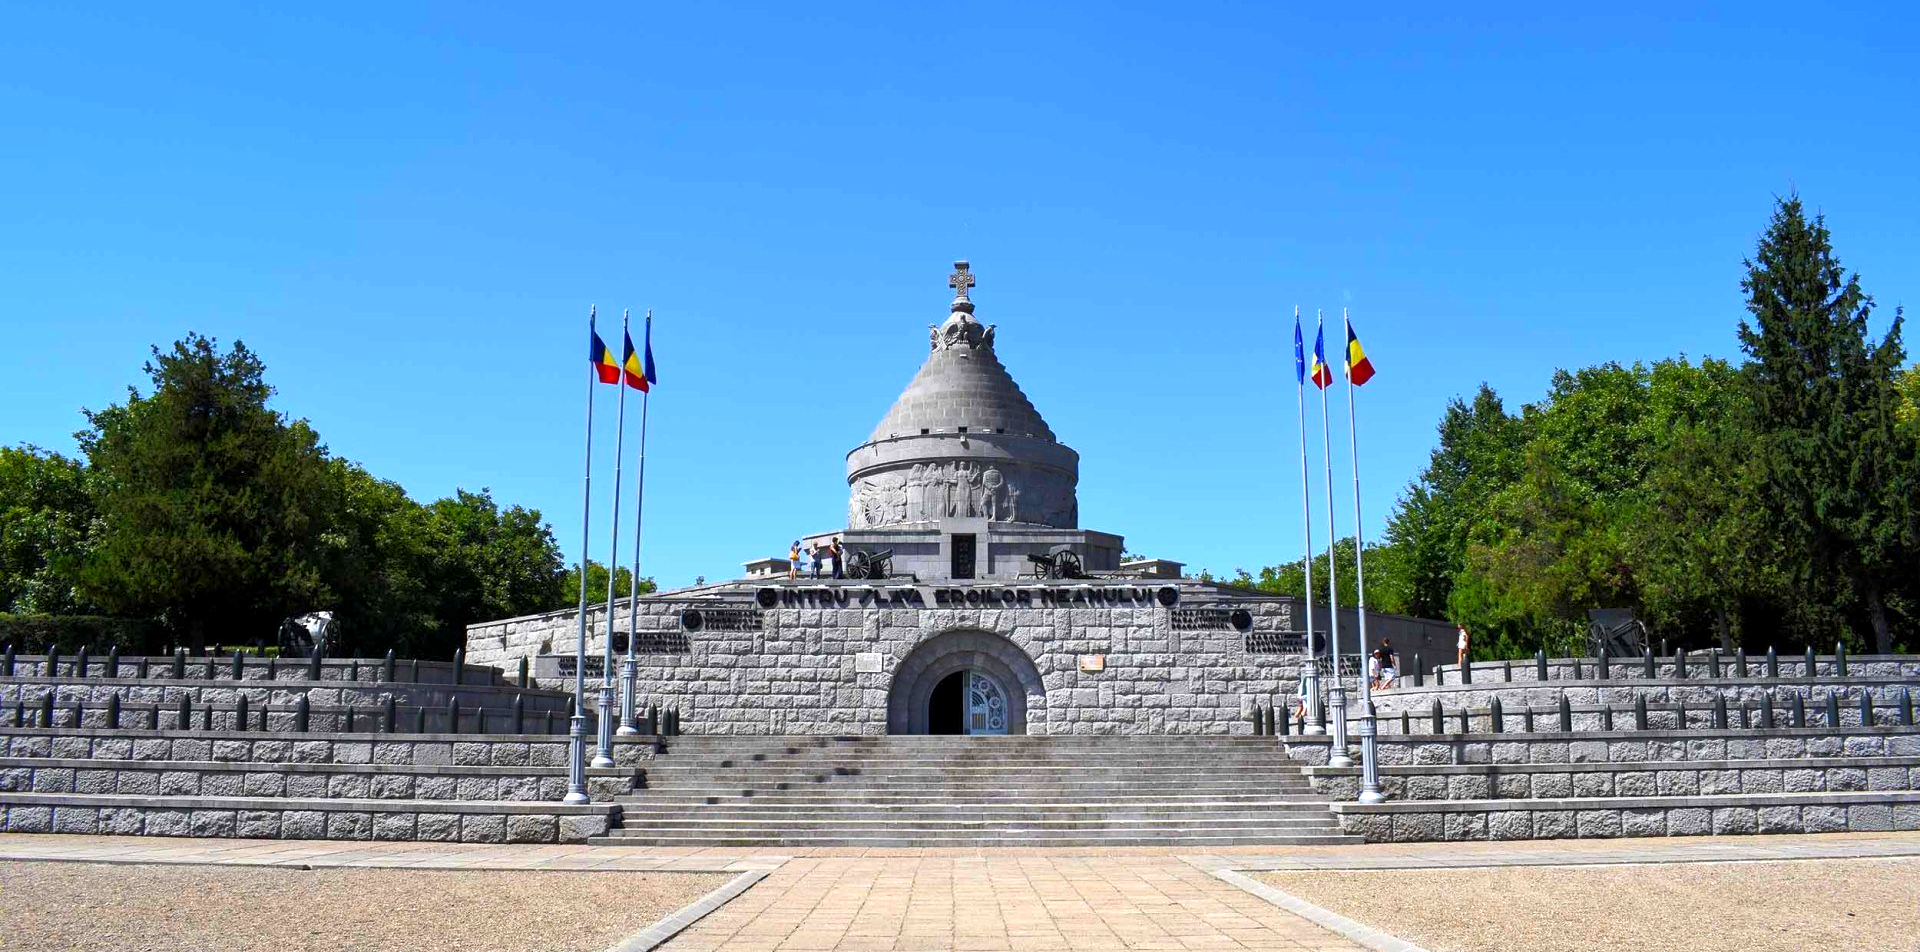 Largest World War One Mausoleum: The Mausoleum of Mărășești set world record